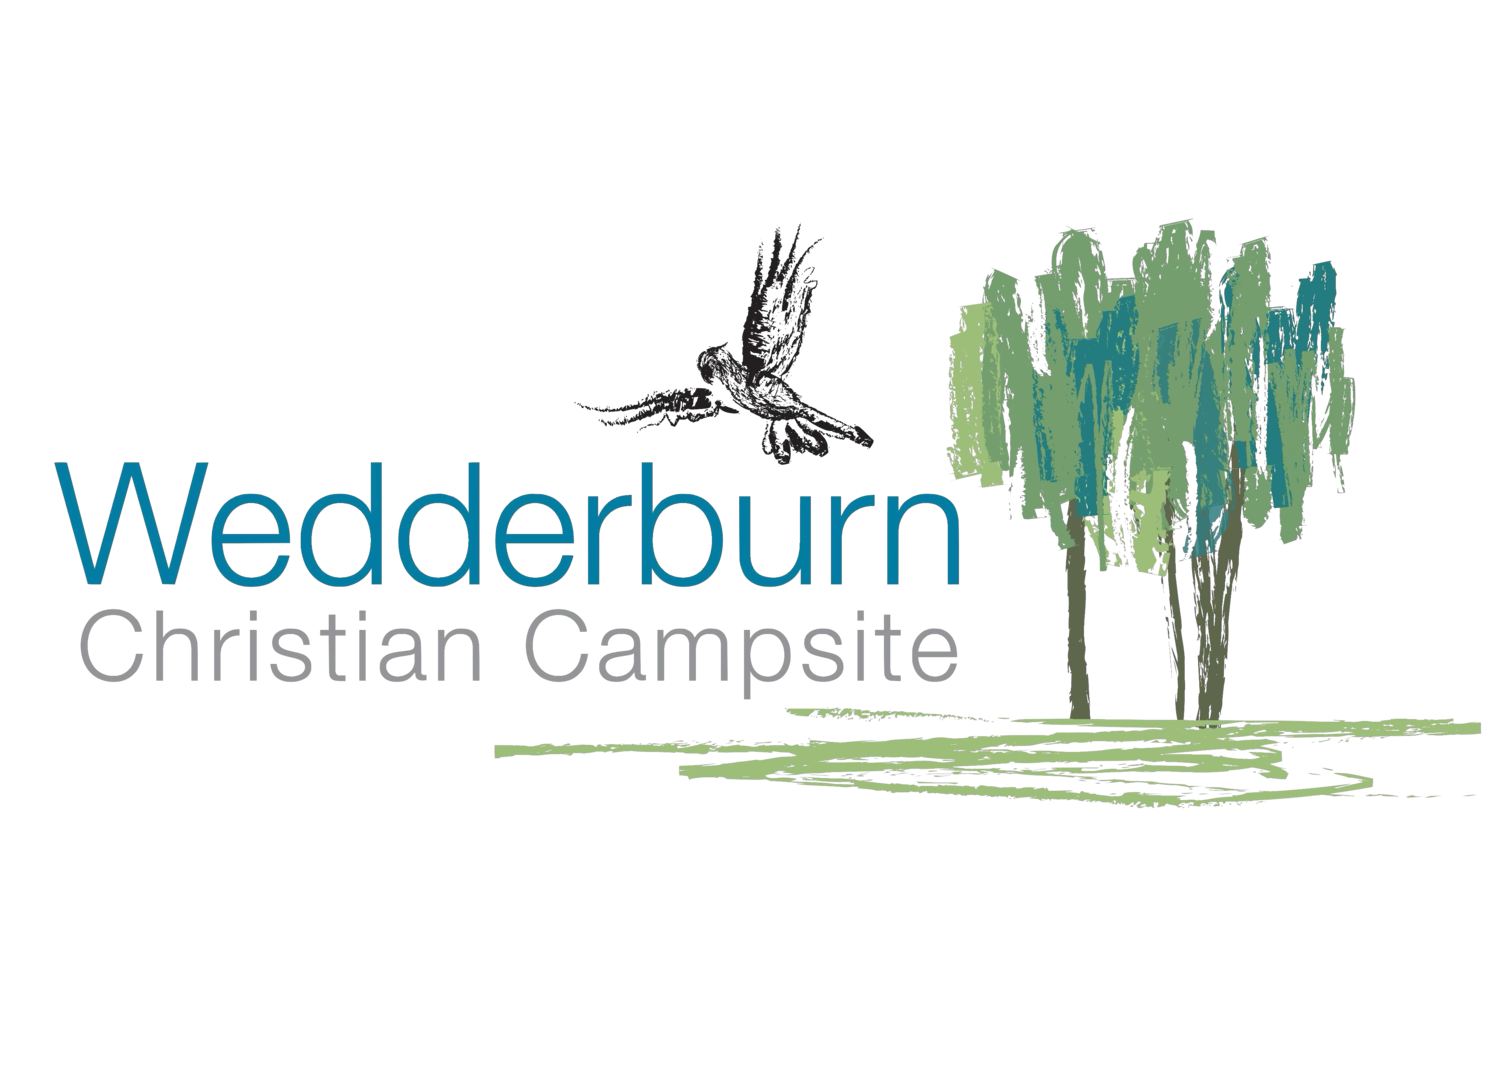 Wedderburn Christian Campsite